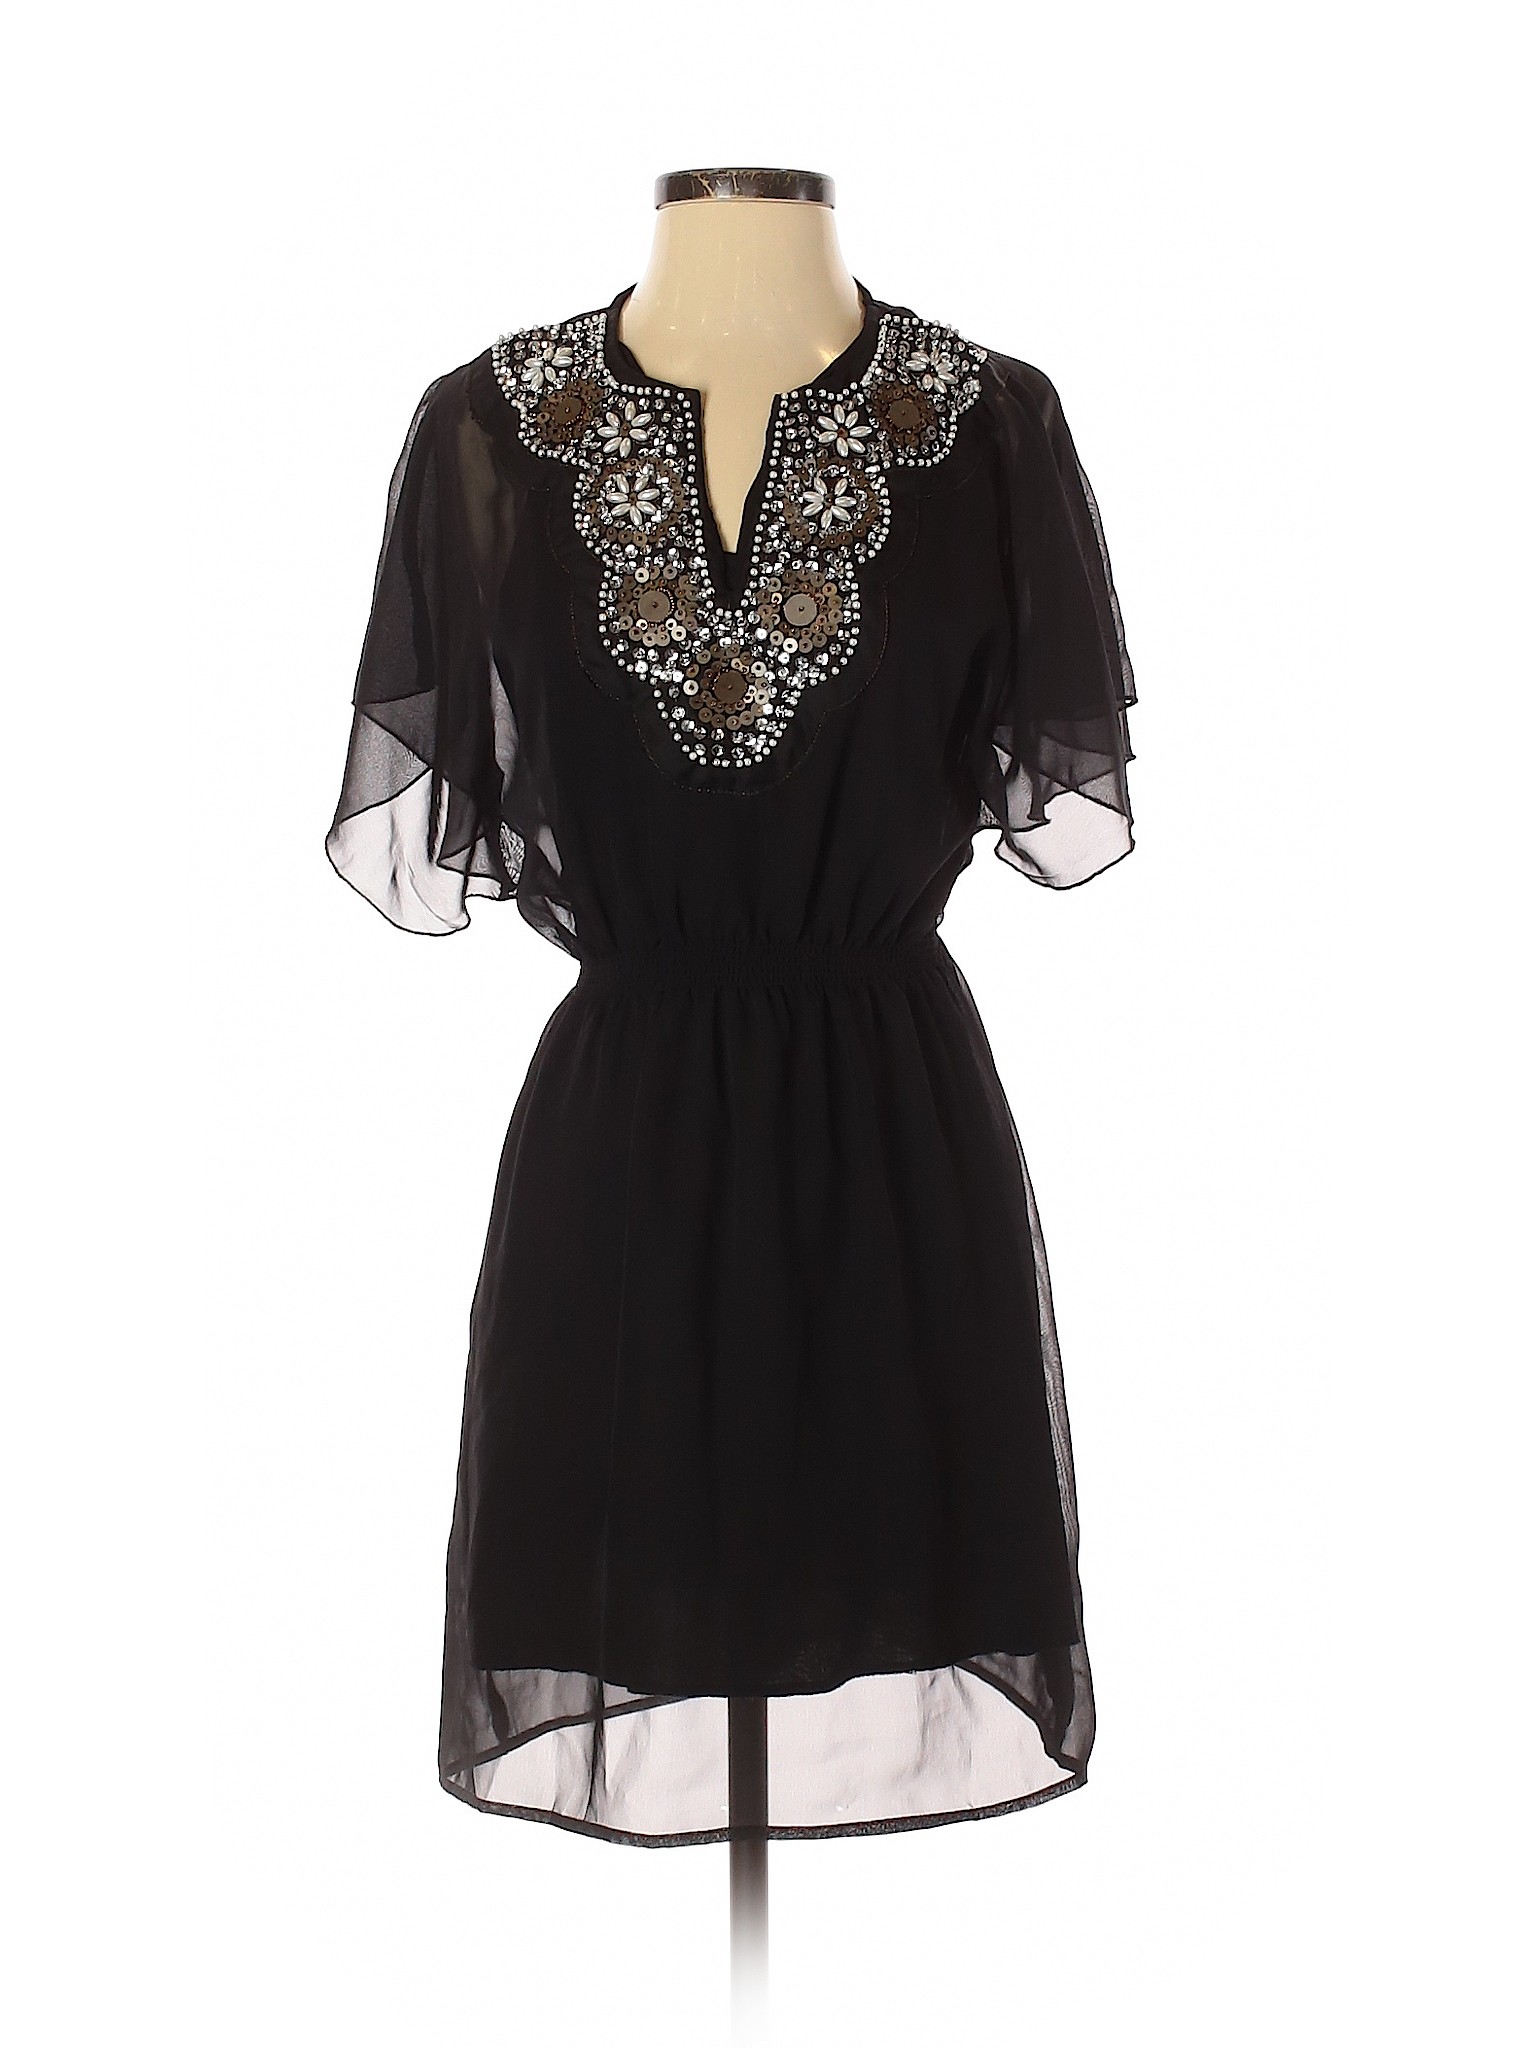 Windsor Women Black Cocktail Dress 5 | eBay